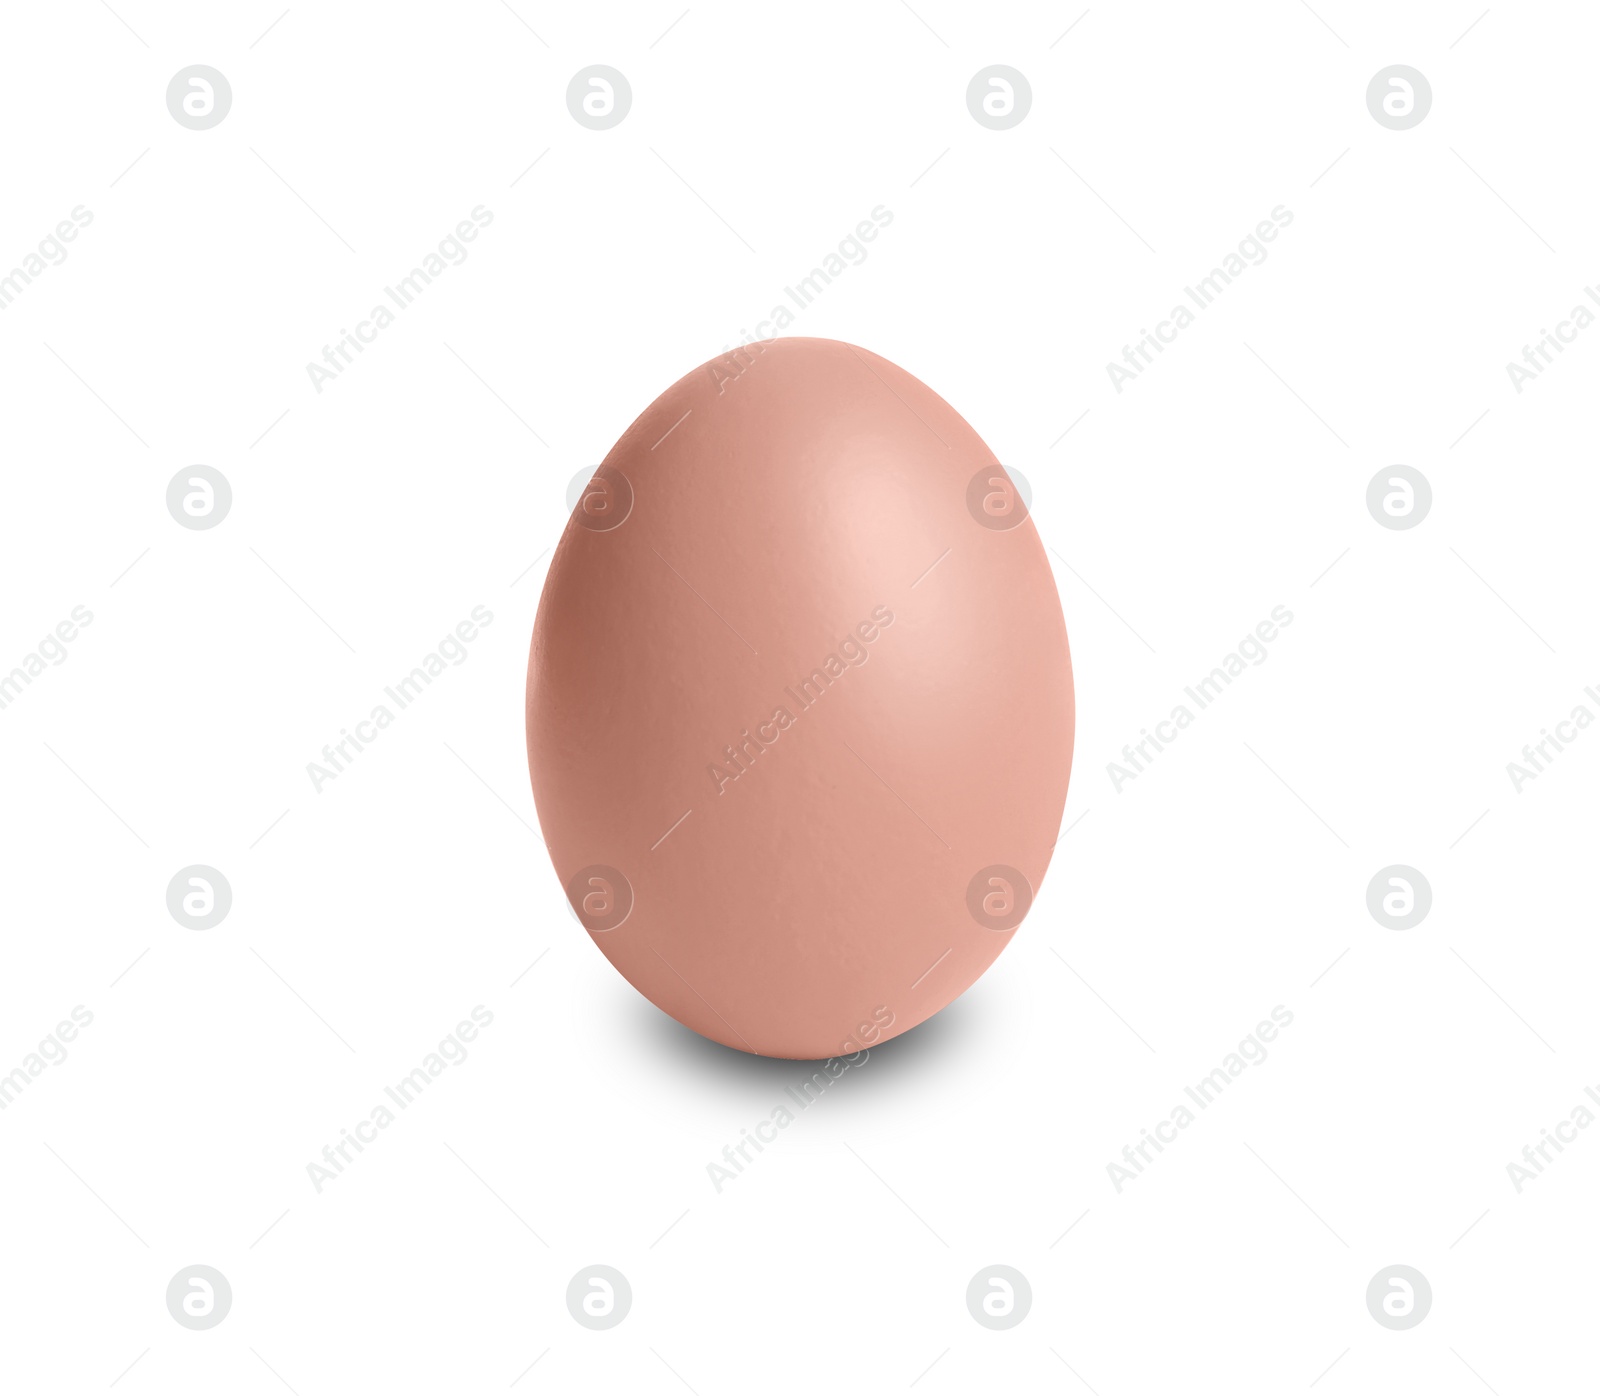 Image of Rose gold egg on white background. Creative design